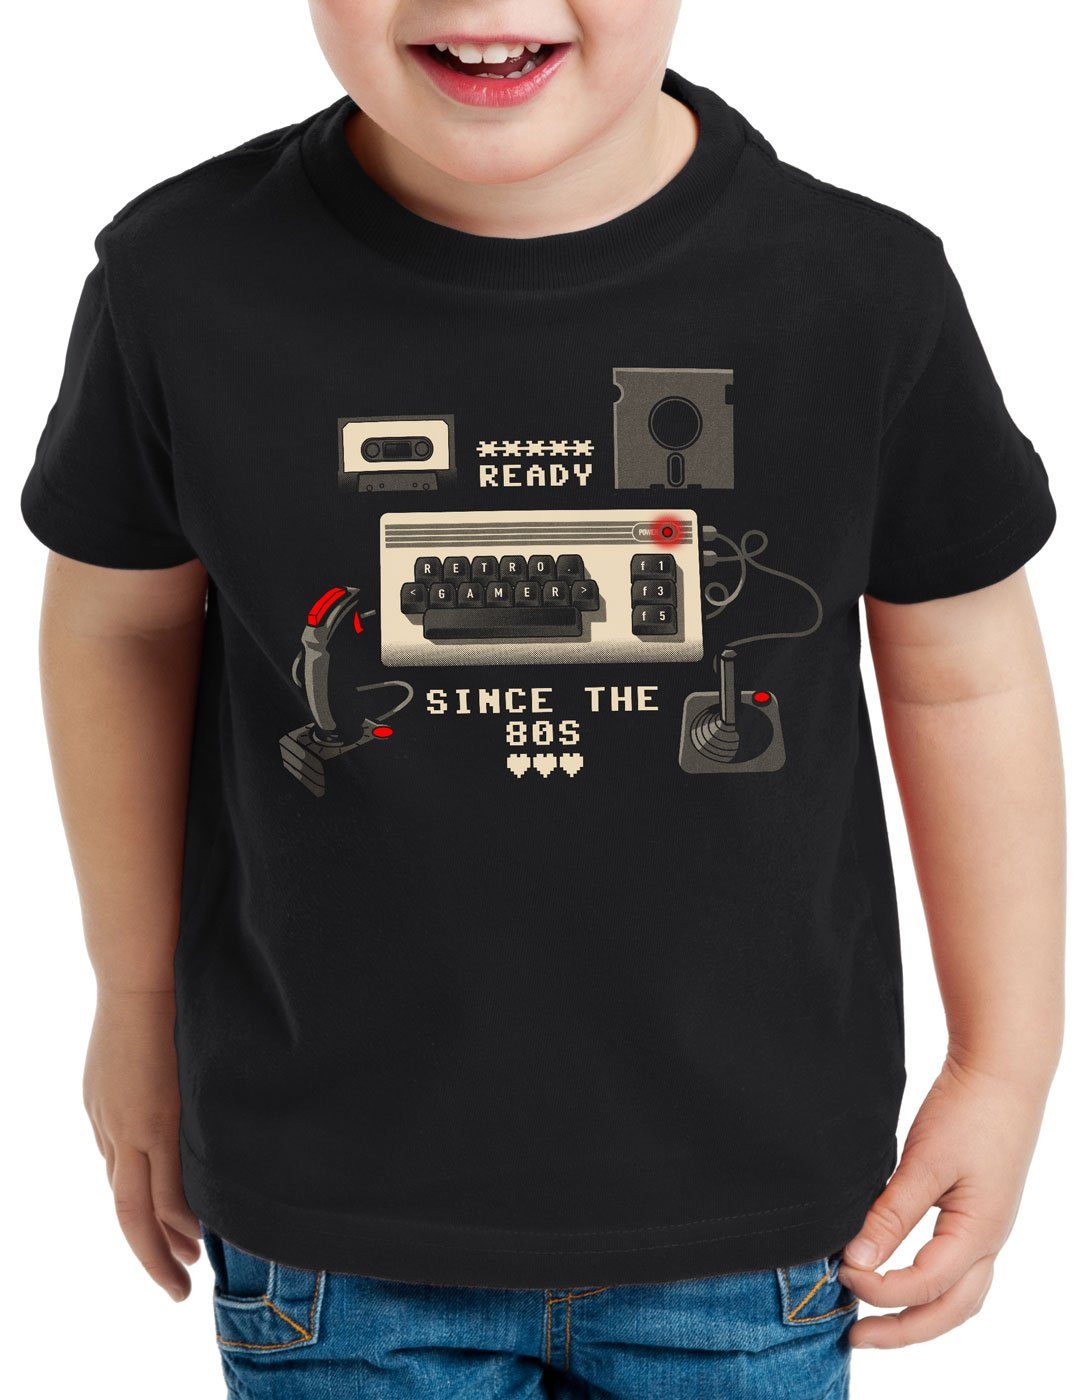 Print-Shirt Love C64 style3 heimcomputer T-Shirt Kinder classic